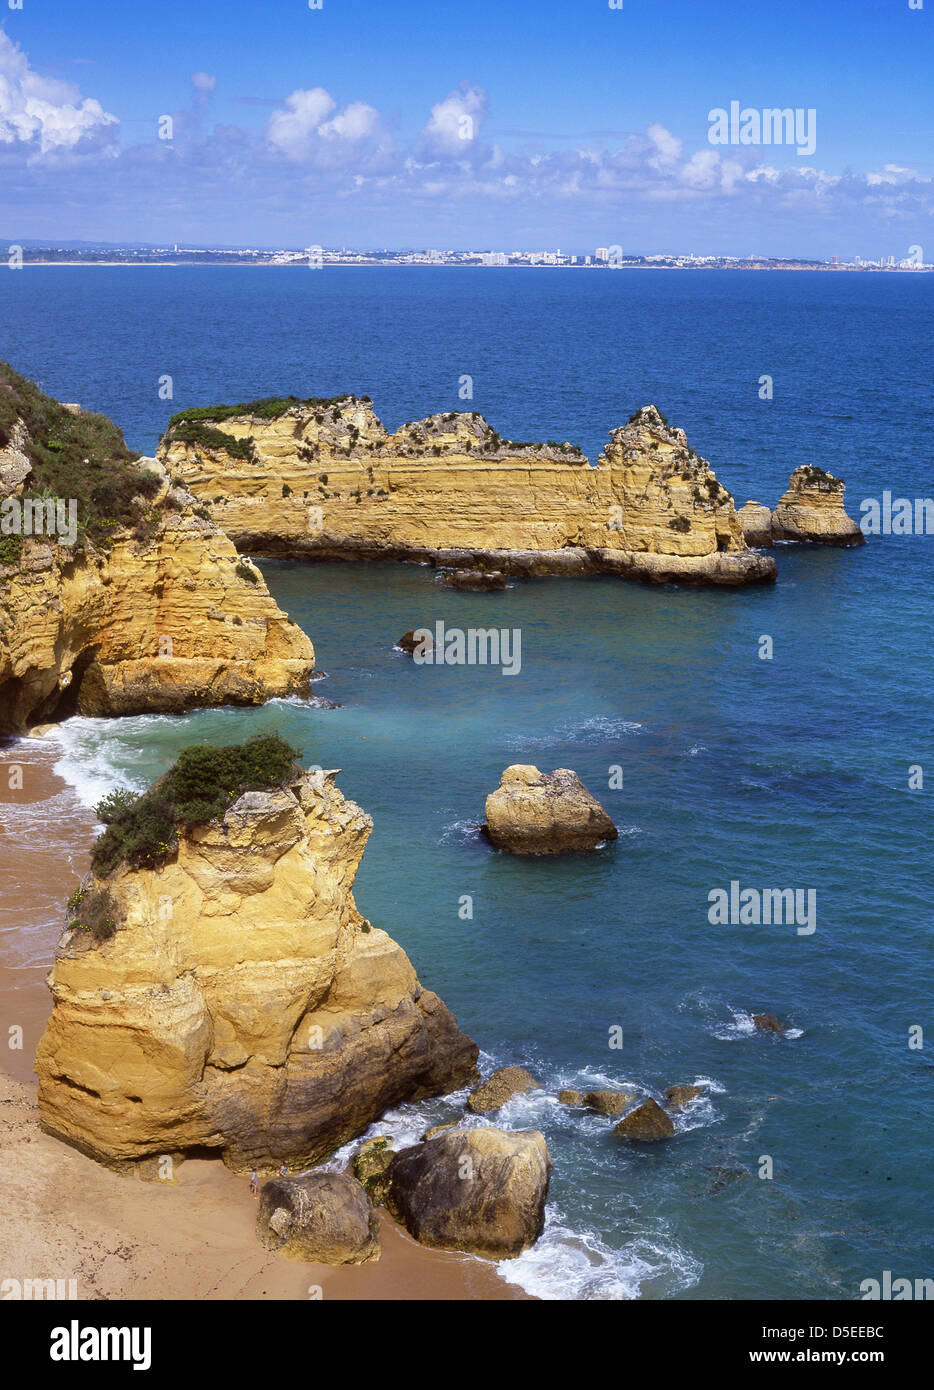 Praia Dona Ana beach with spectacular rock formations Near Lagos Algarve Portugal Stock Photo